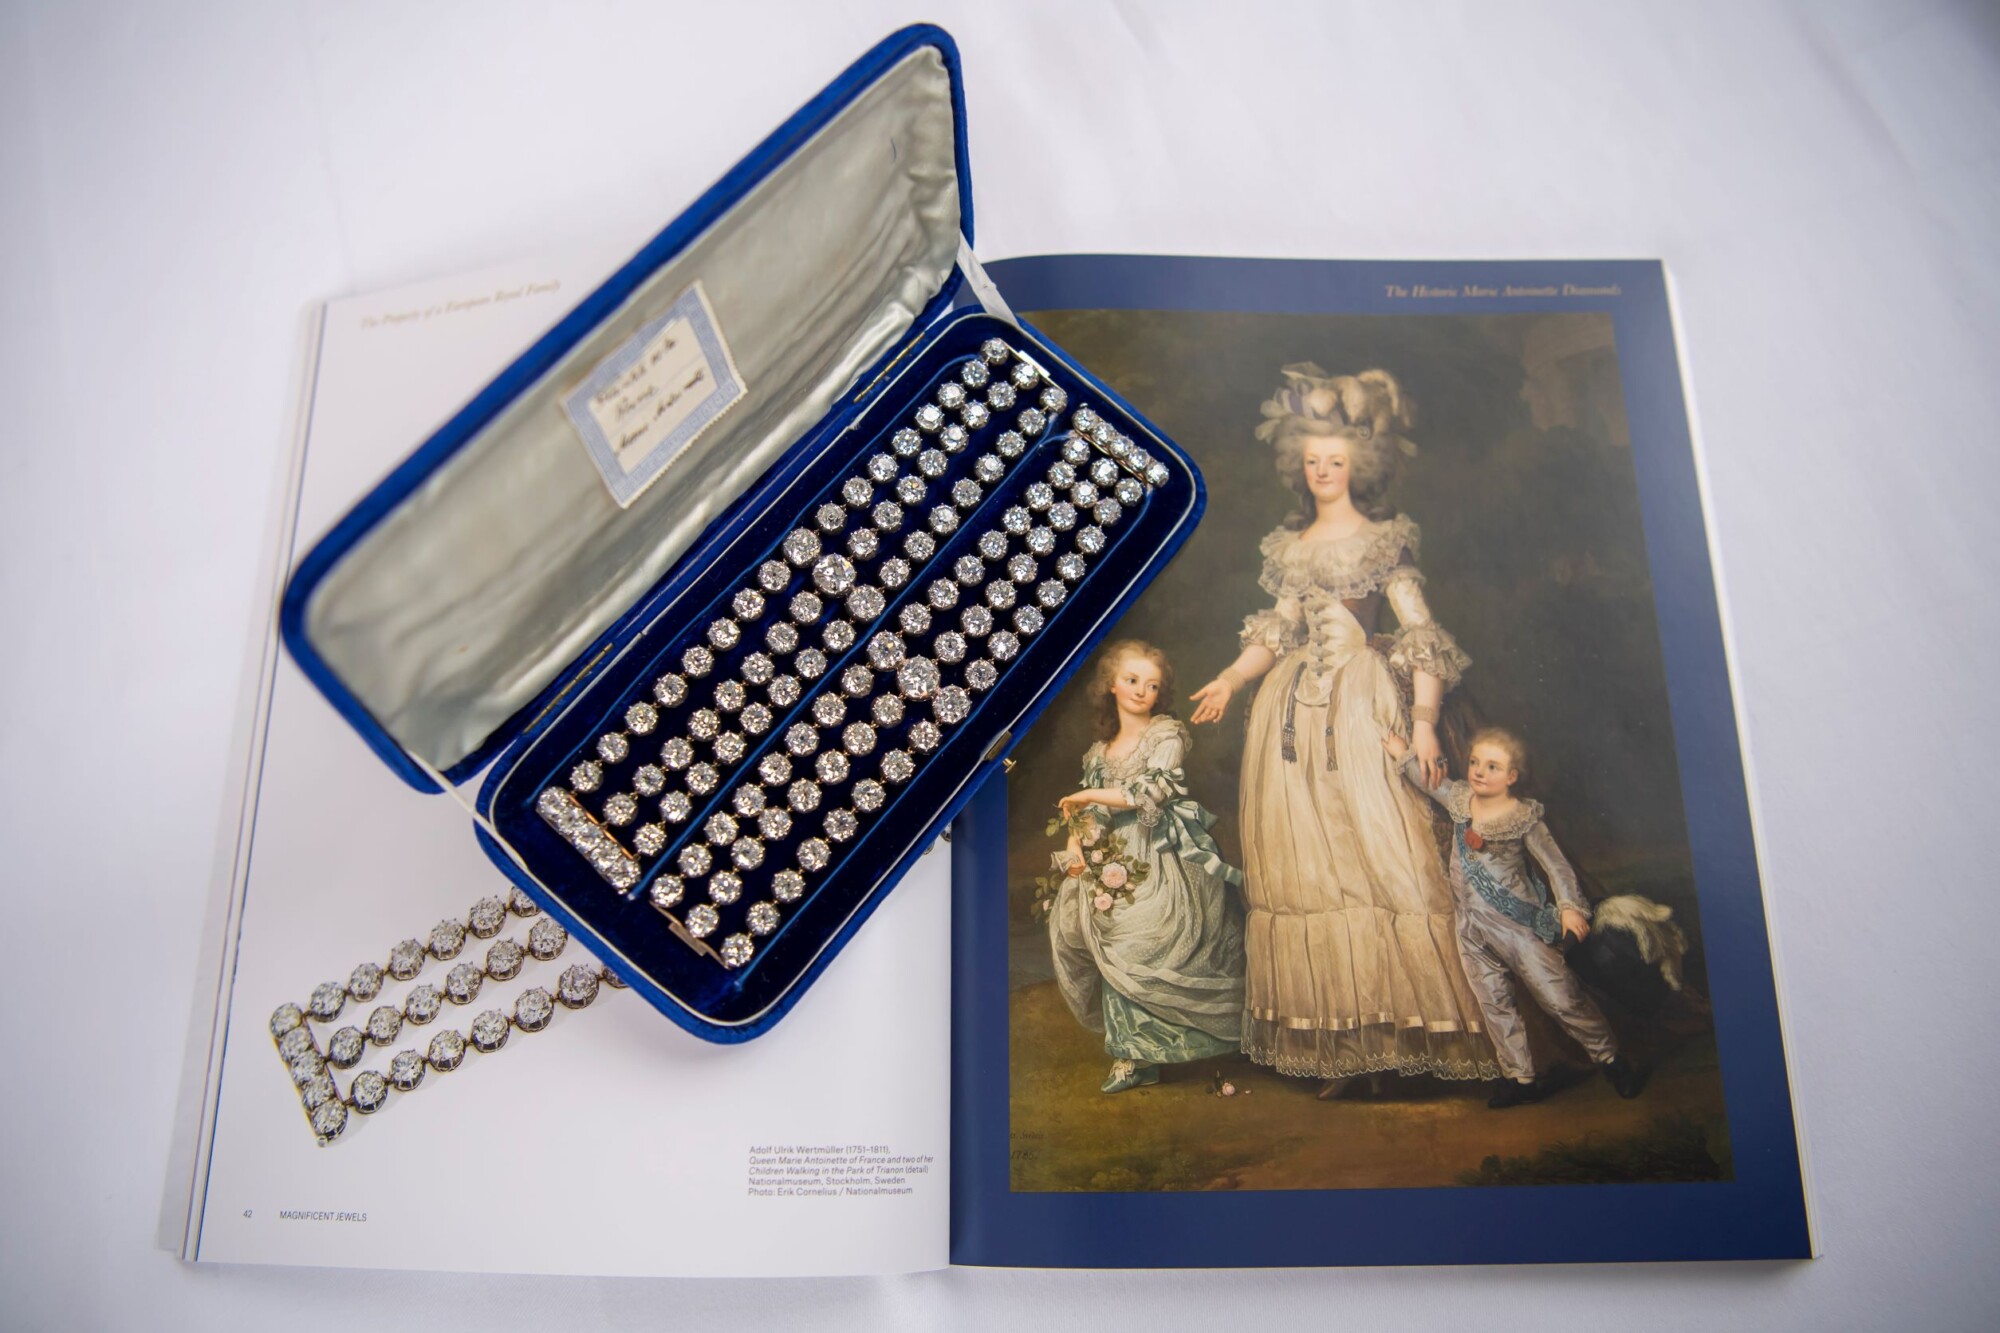 Marie-Antoinette’s Diamond Bracelets Smash Auction Estimate, Selling for $8.2 Million